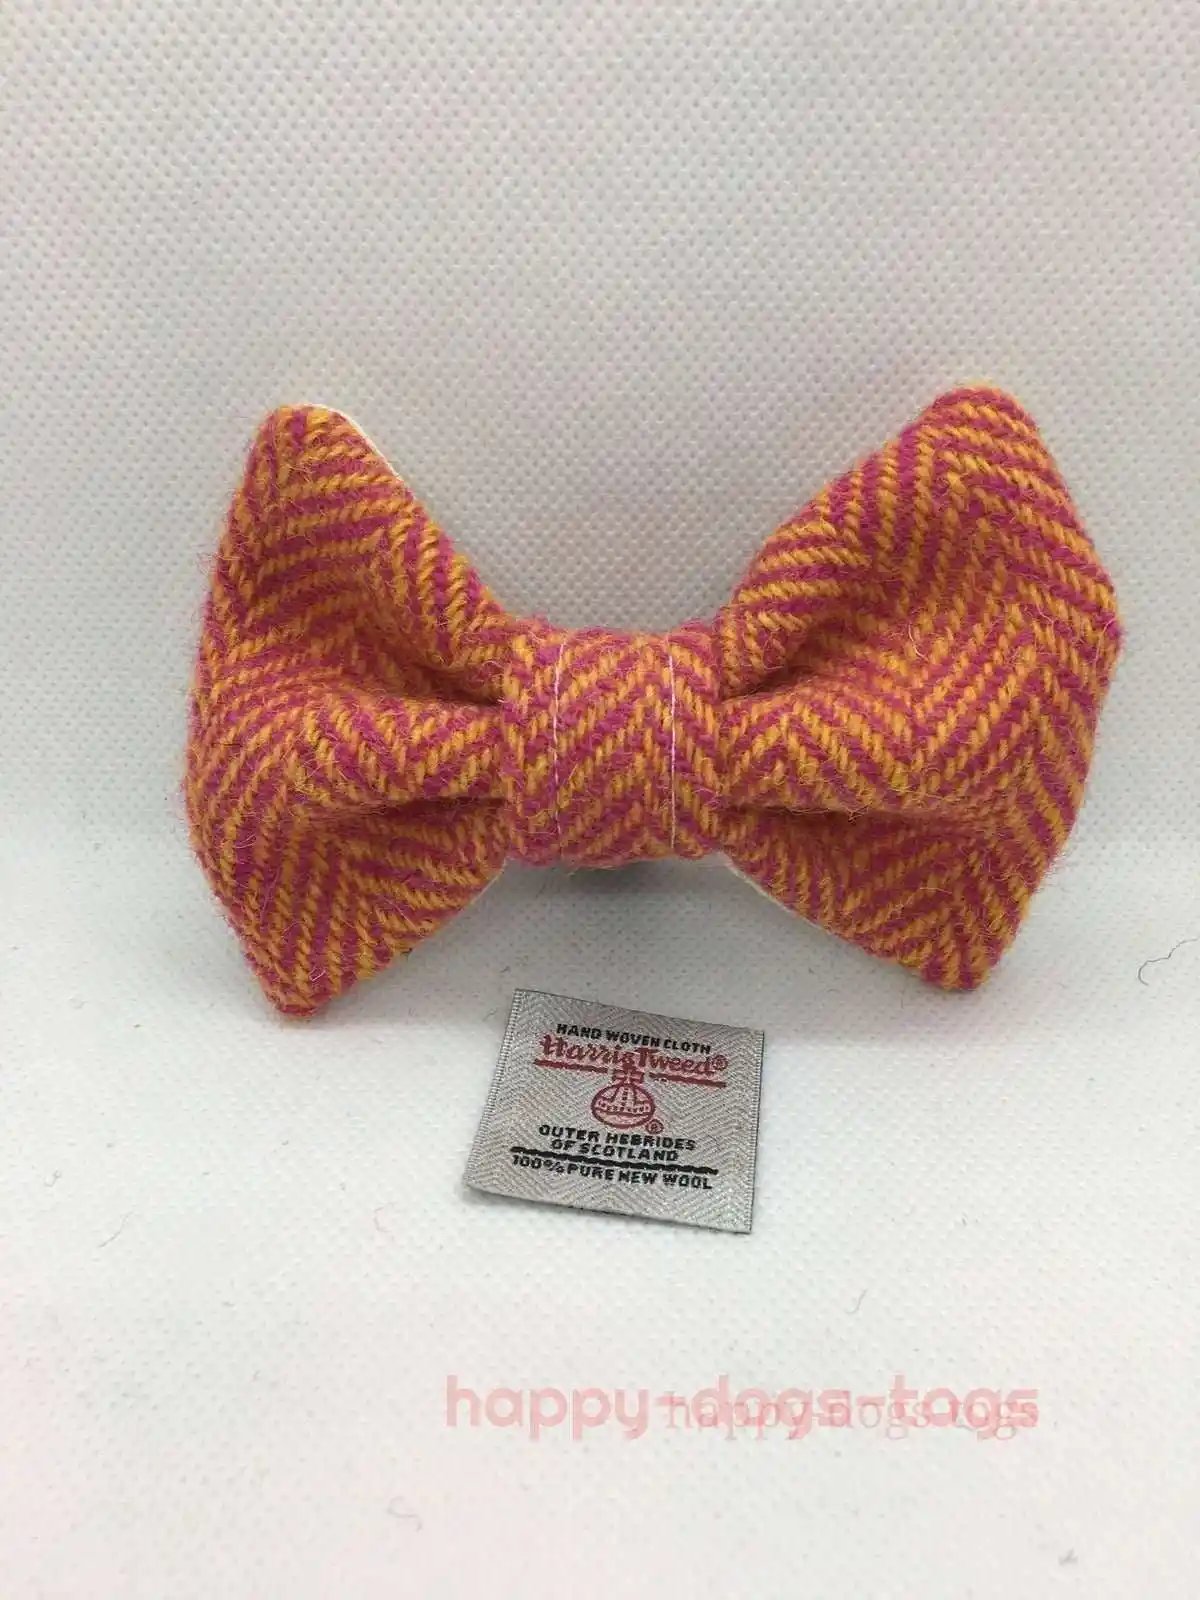  HARRIS TWEED Dog Bow Tie, Yellow, Pink